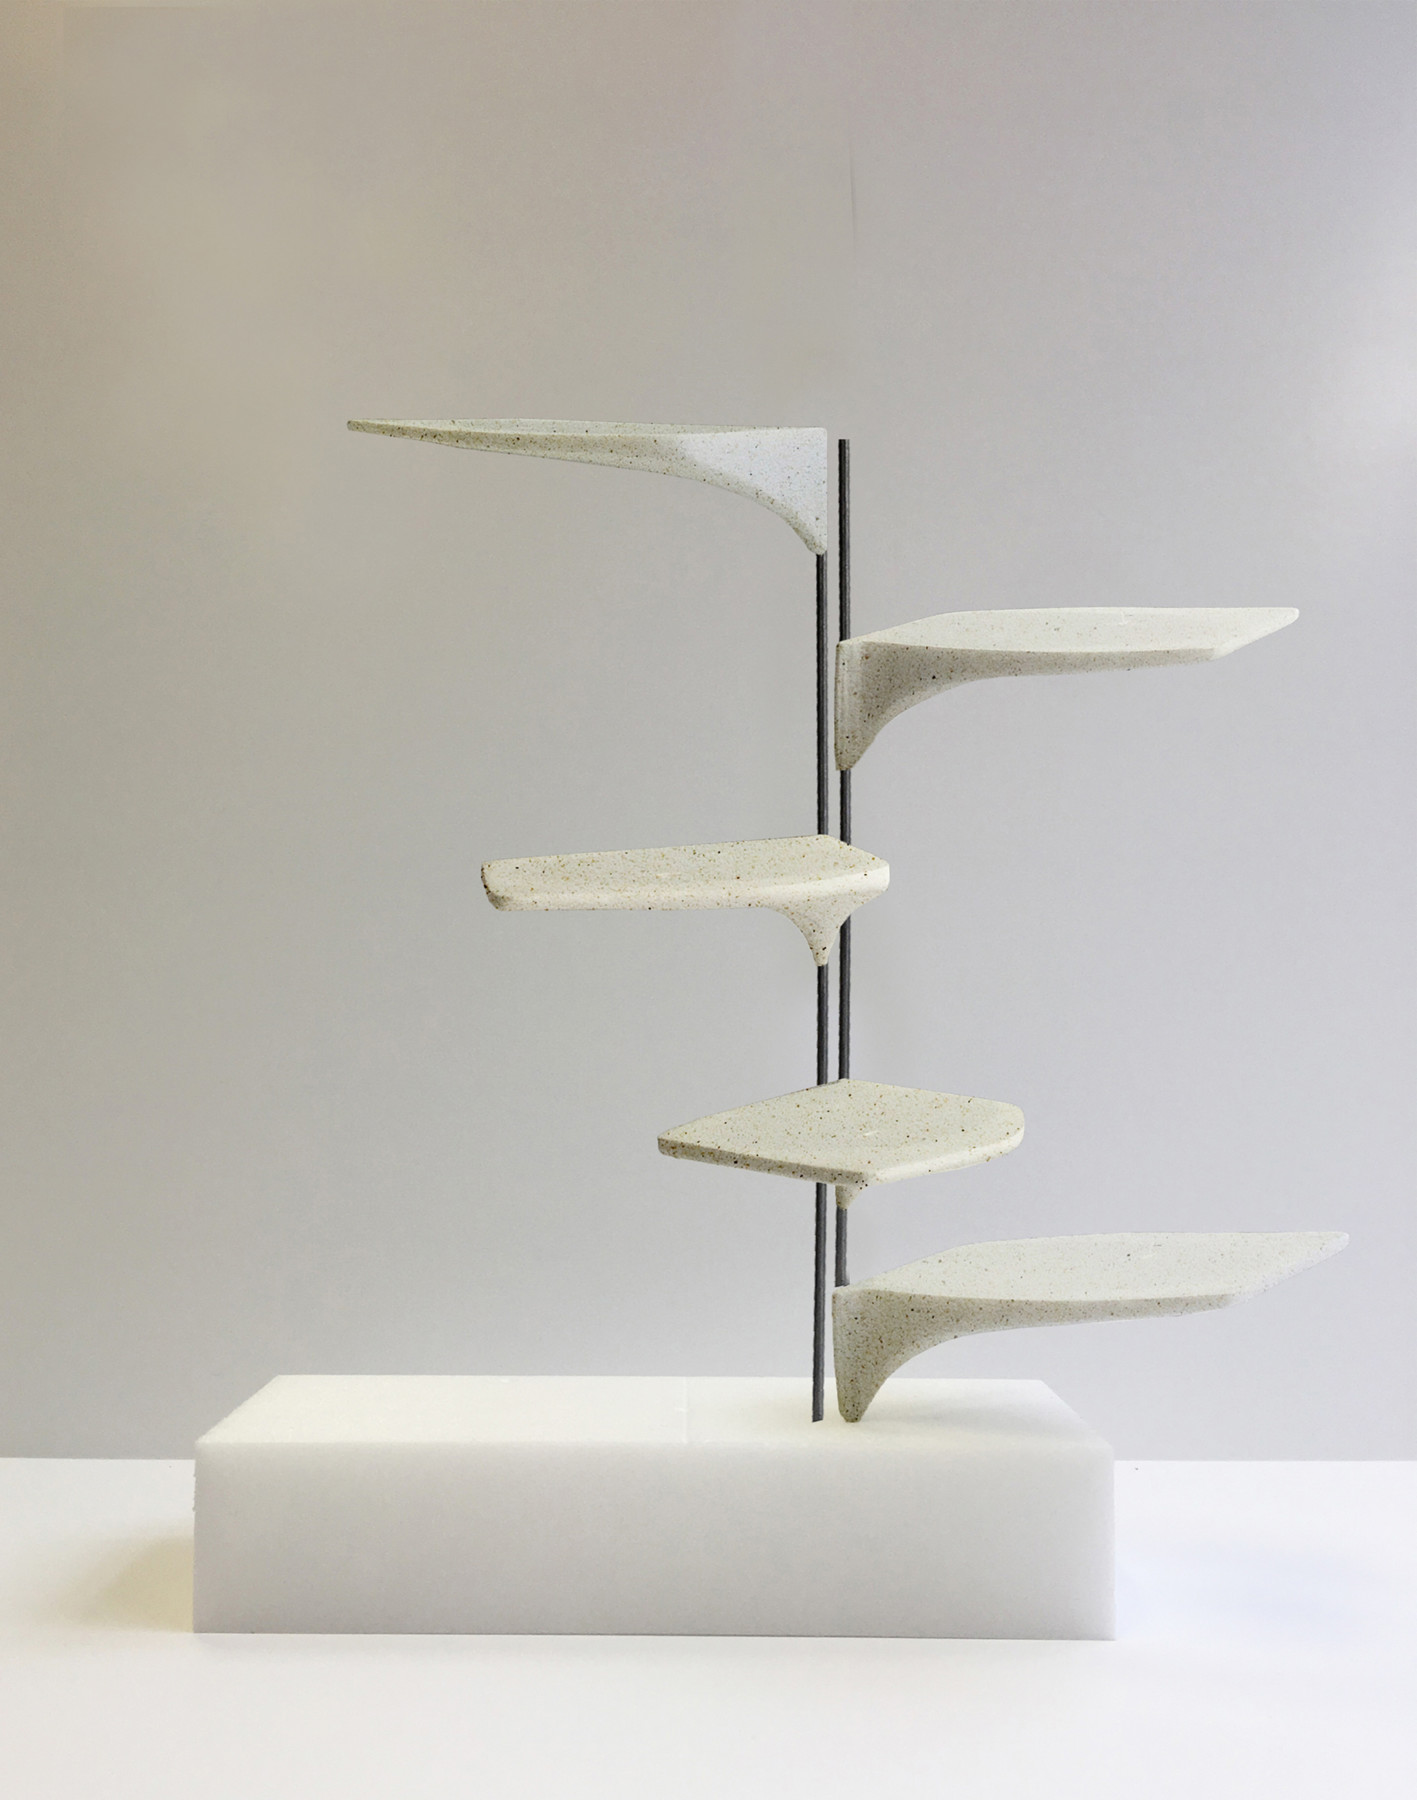 Jamie-Fobert-Architects-Retail-Interiors-Kurt-Geiger-Selfridges-Design-Model-Development-leaf